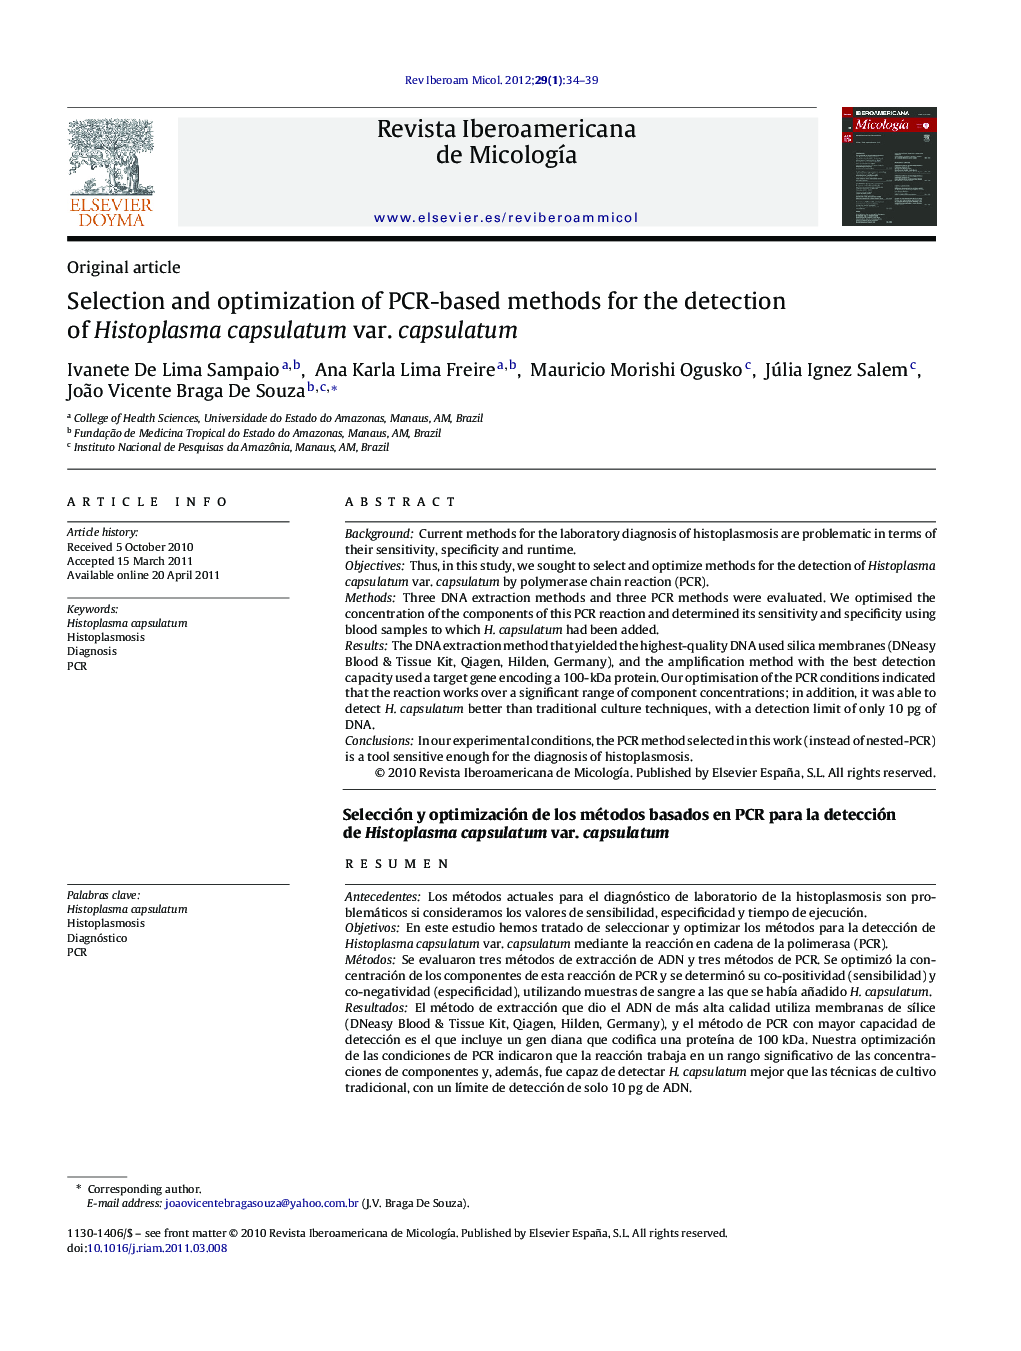 Selection and optimization of PCR-based methods for the detection of Histoplasma capsulatum var. capsulatum